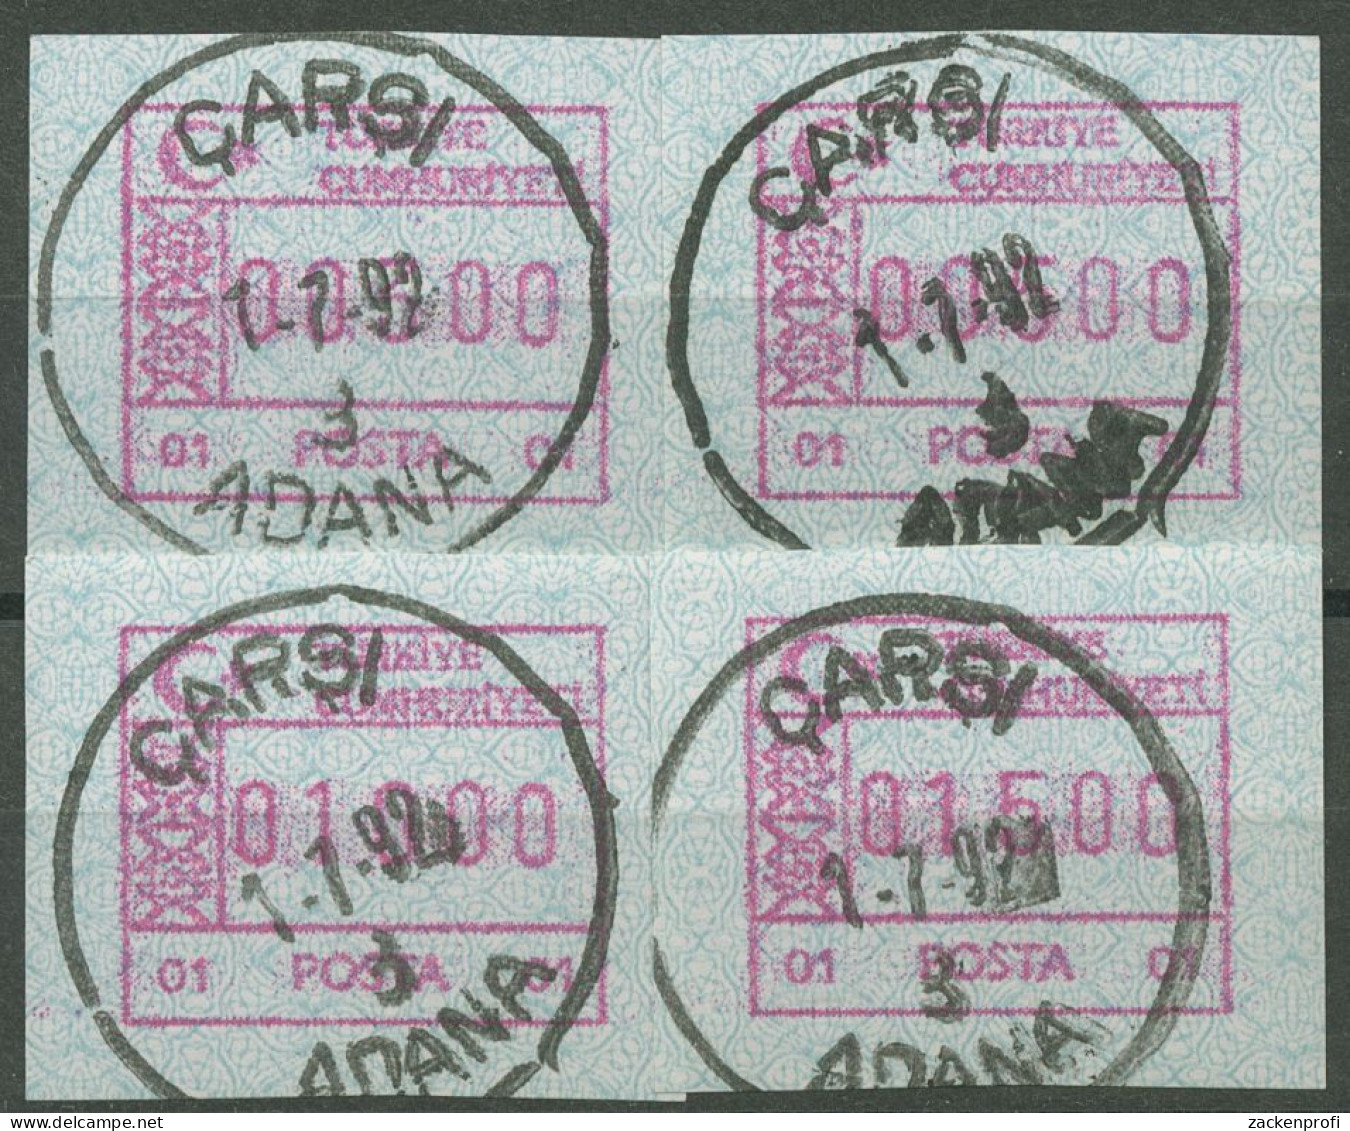 Türkei ATM 1992 Ornamente Automat 01 01, Satz 4 Werte ATM 2.1 S1 Gestempelt - Distributors